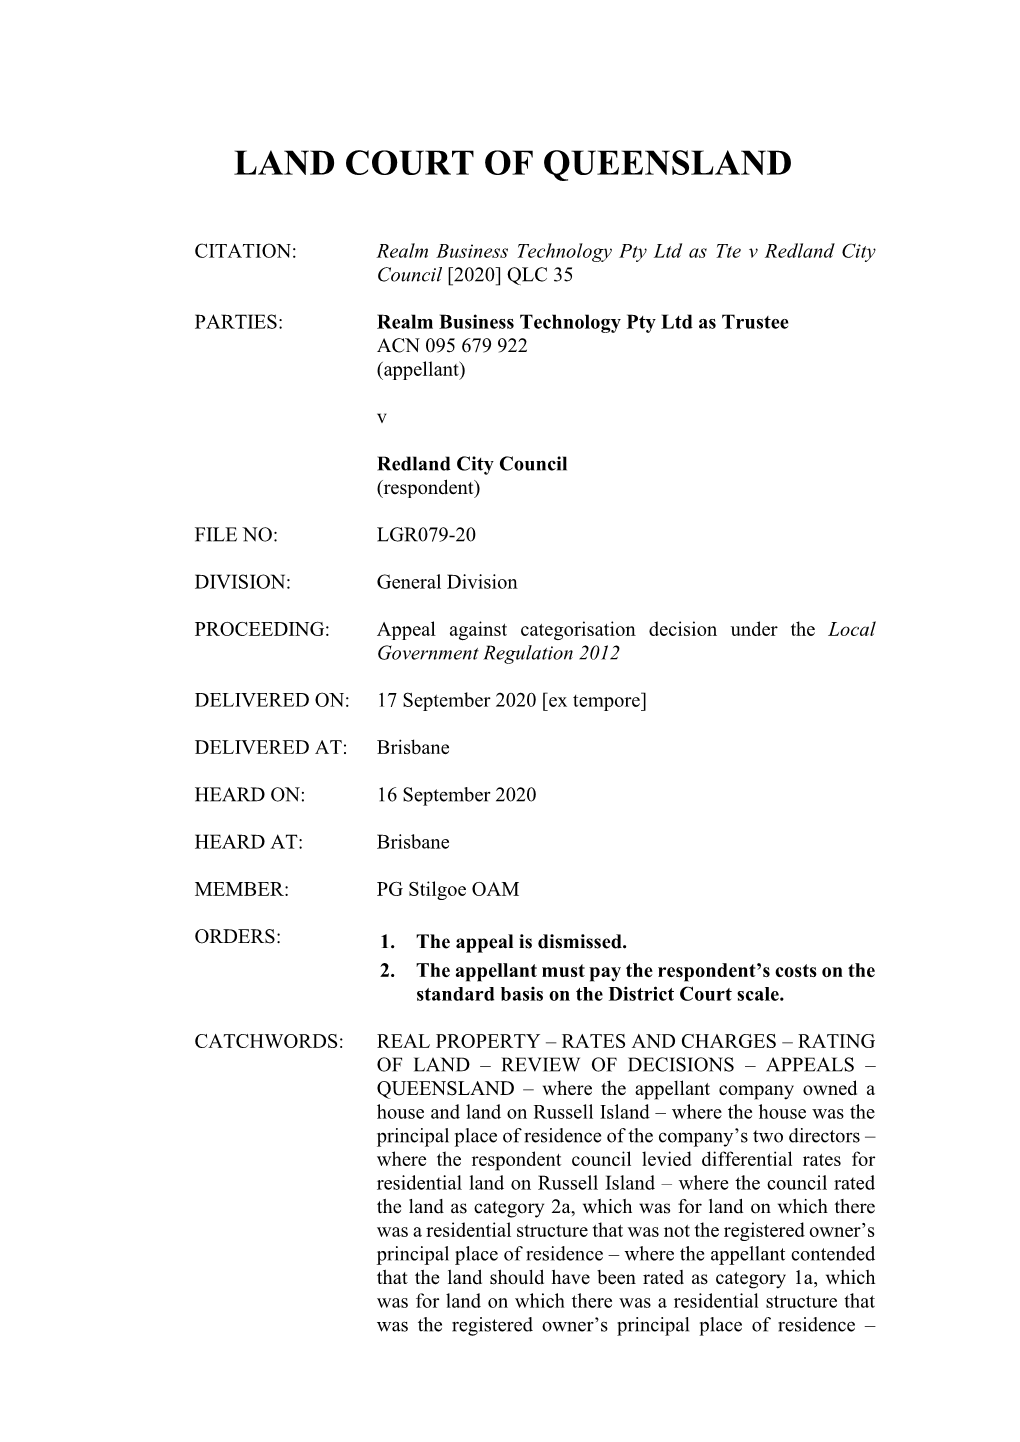 Realm Business Technology Pty Ltd As Tte V Redland City Council [2020] QLC 35